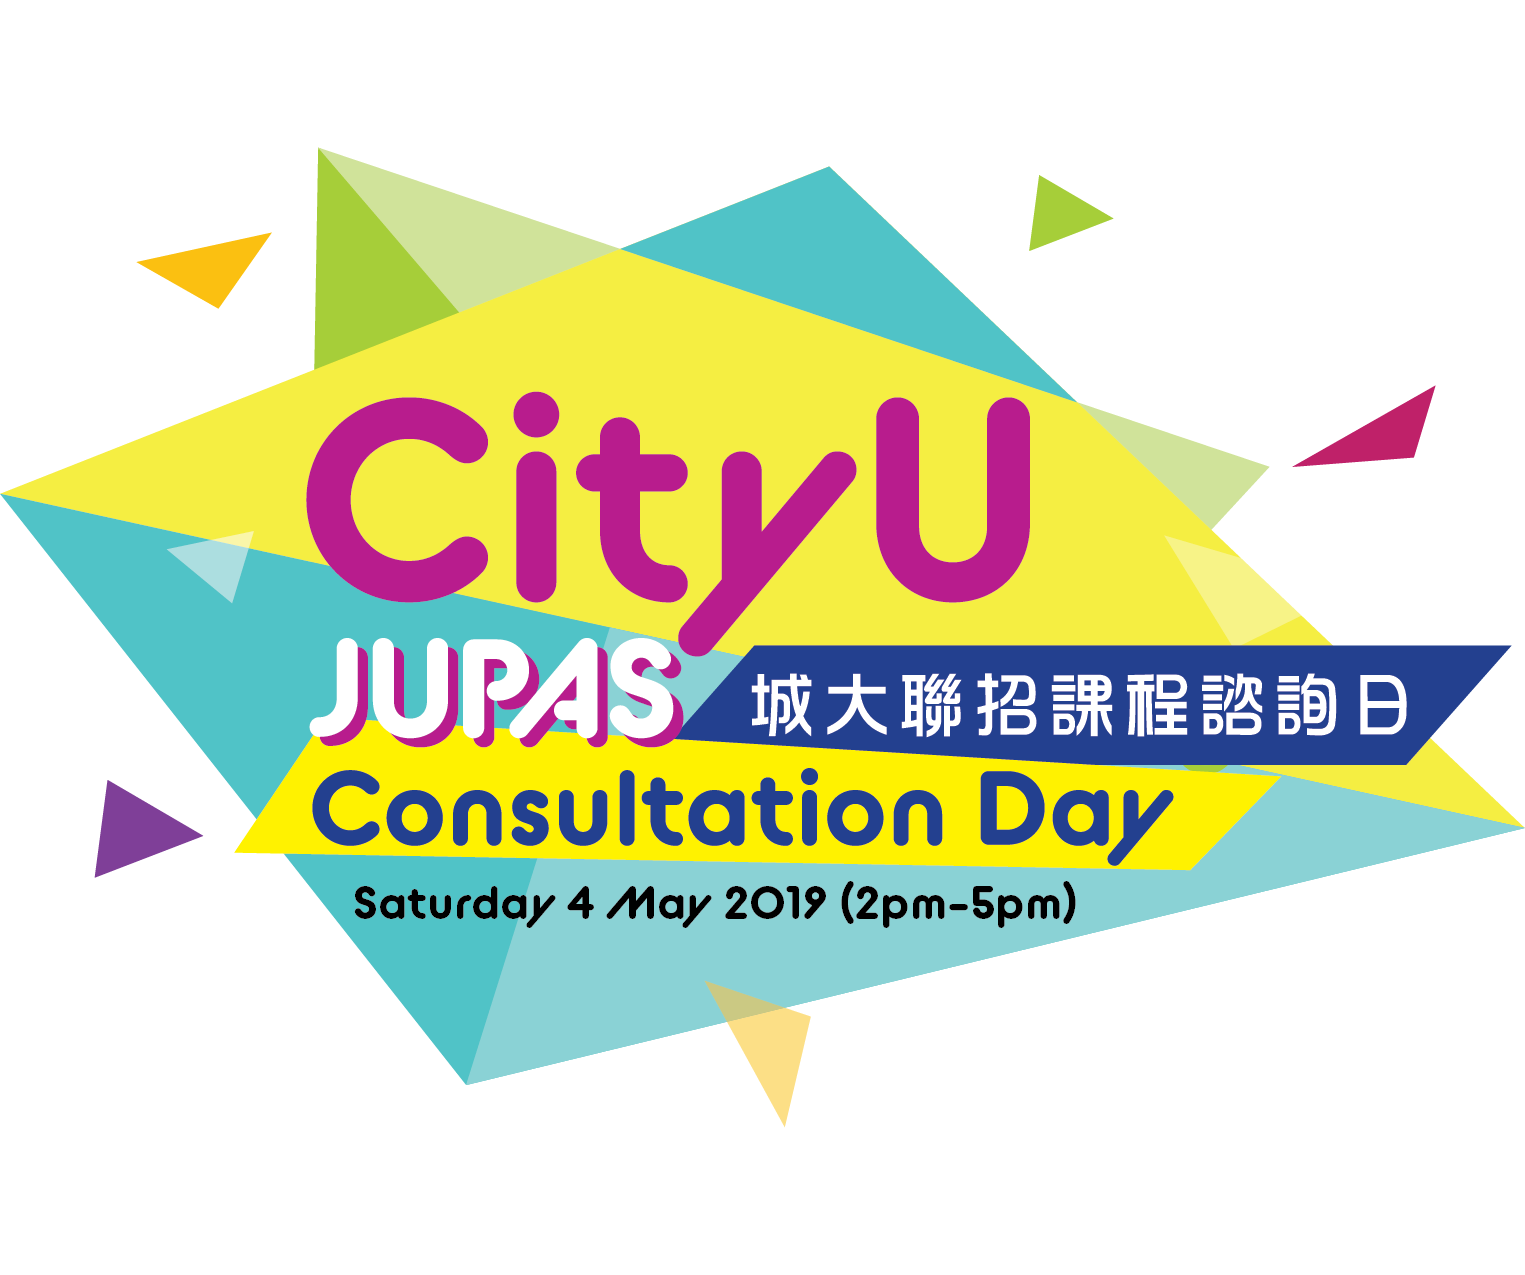 CityU JUPAS Consultation Day 2019